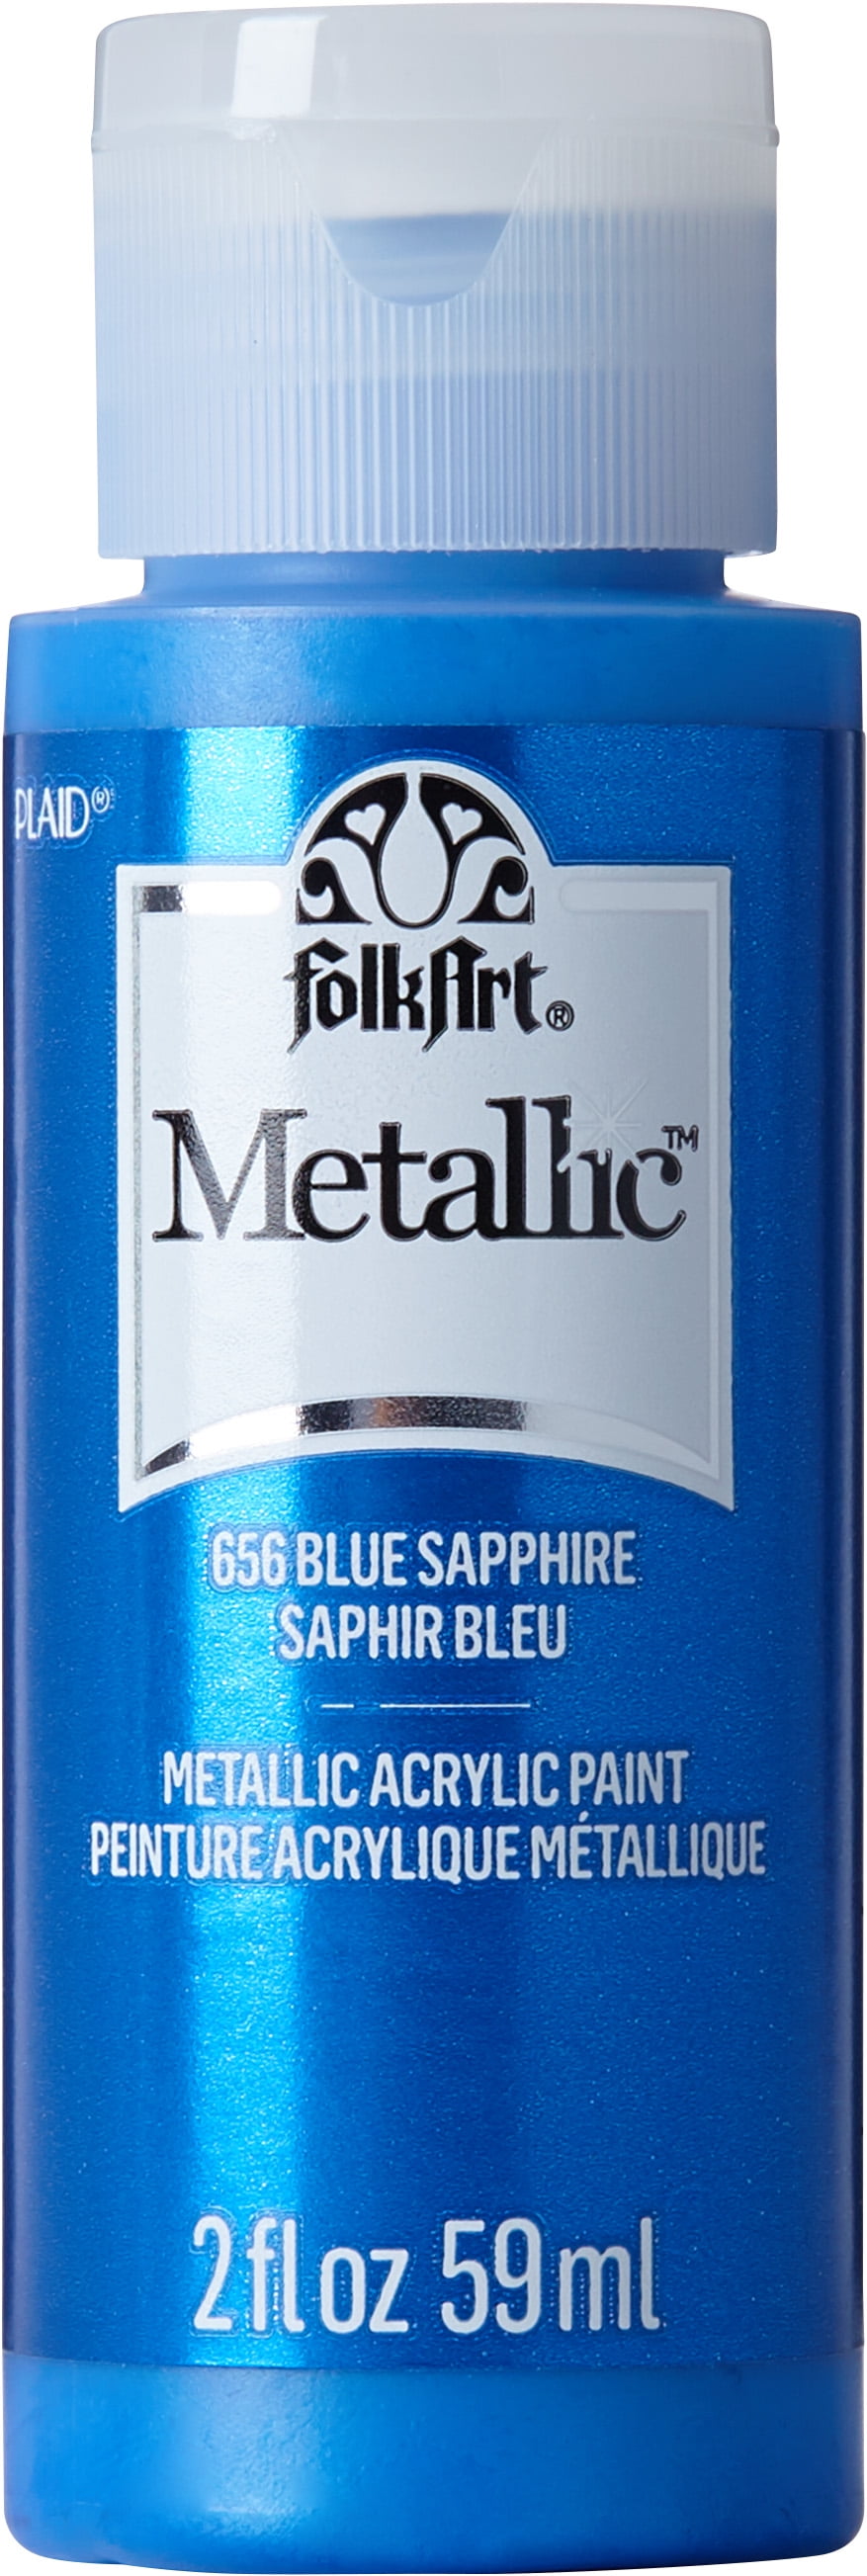 FolkArt Metallic Acrylic Craft Paint, Metallic Finish, Blue Sapphire, 2 fl oz